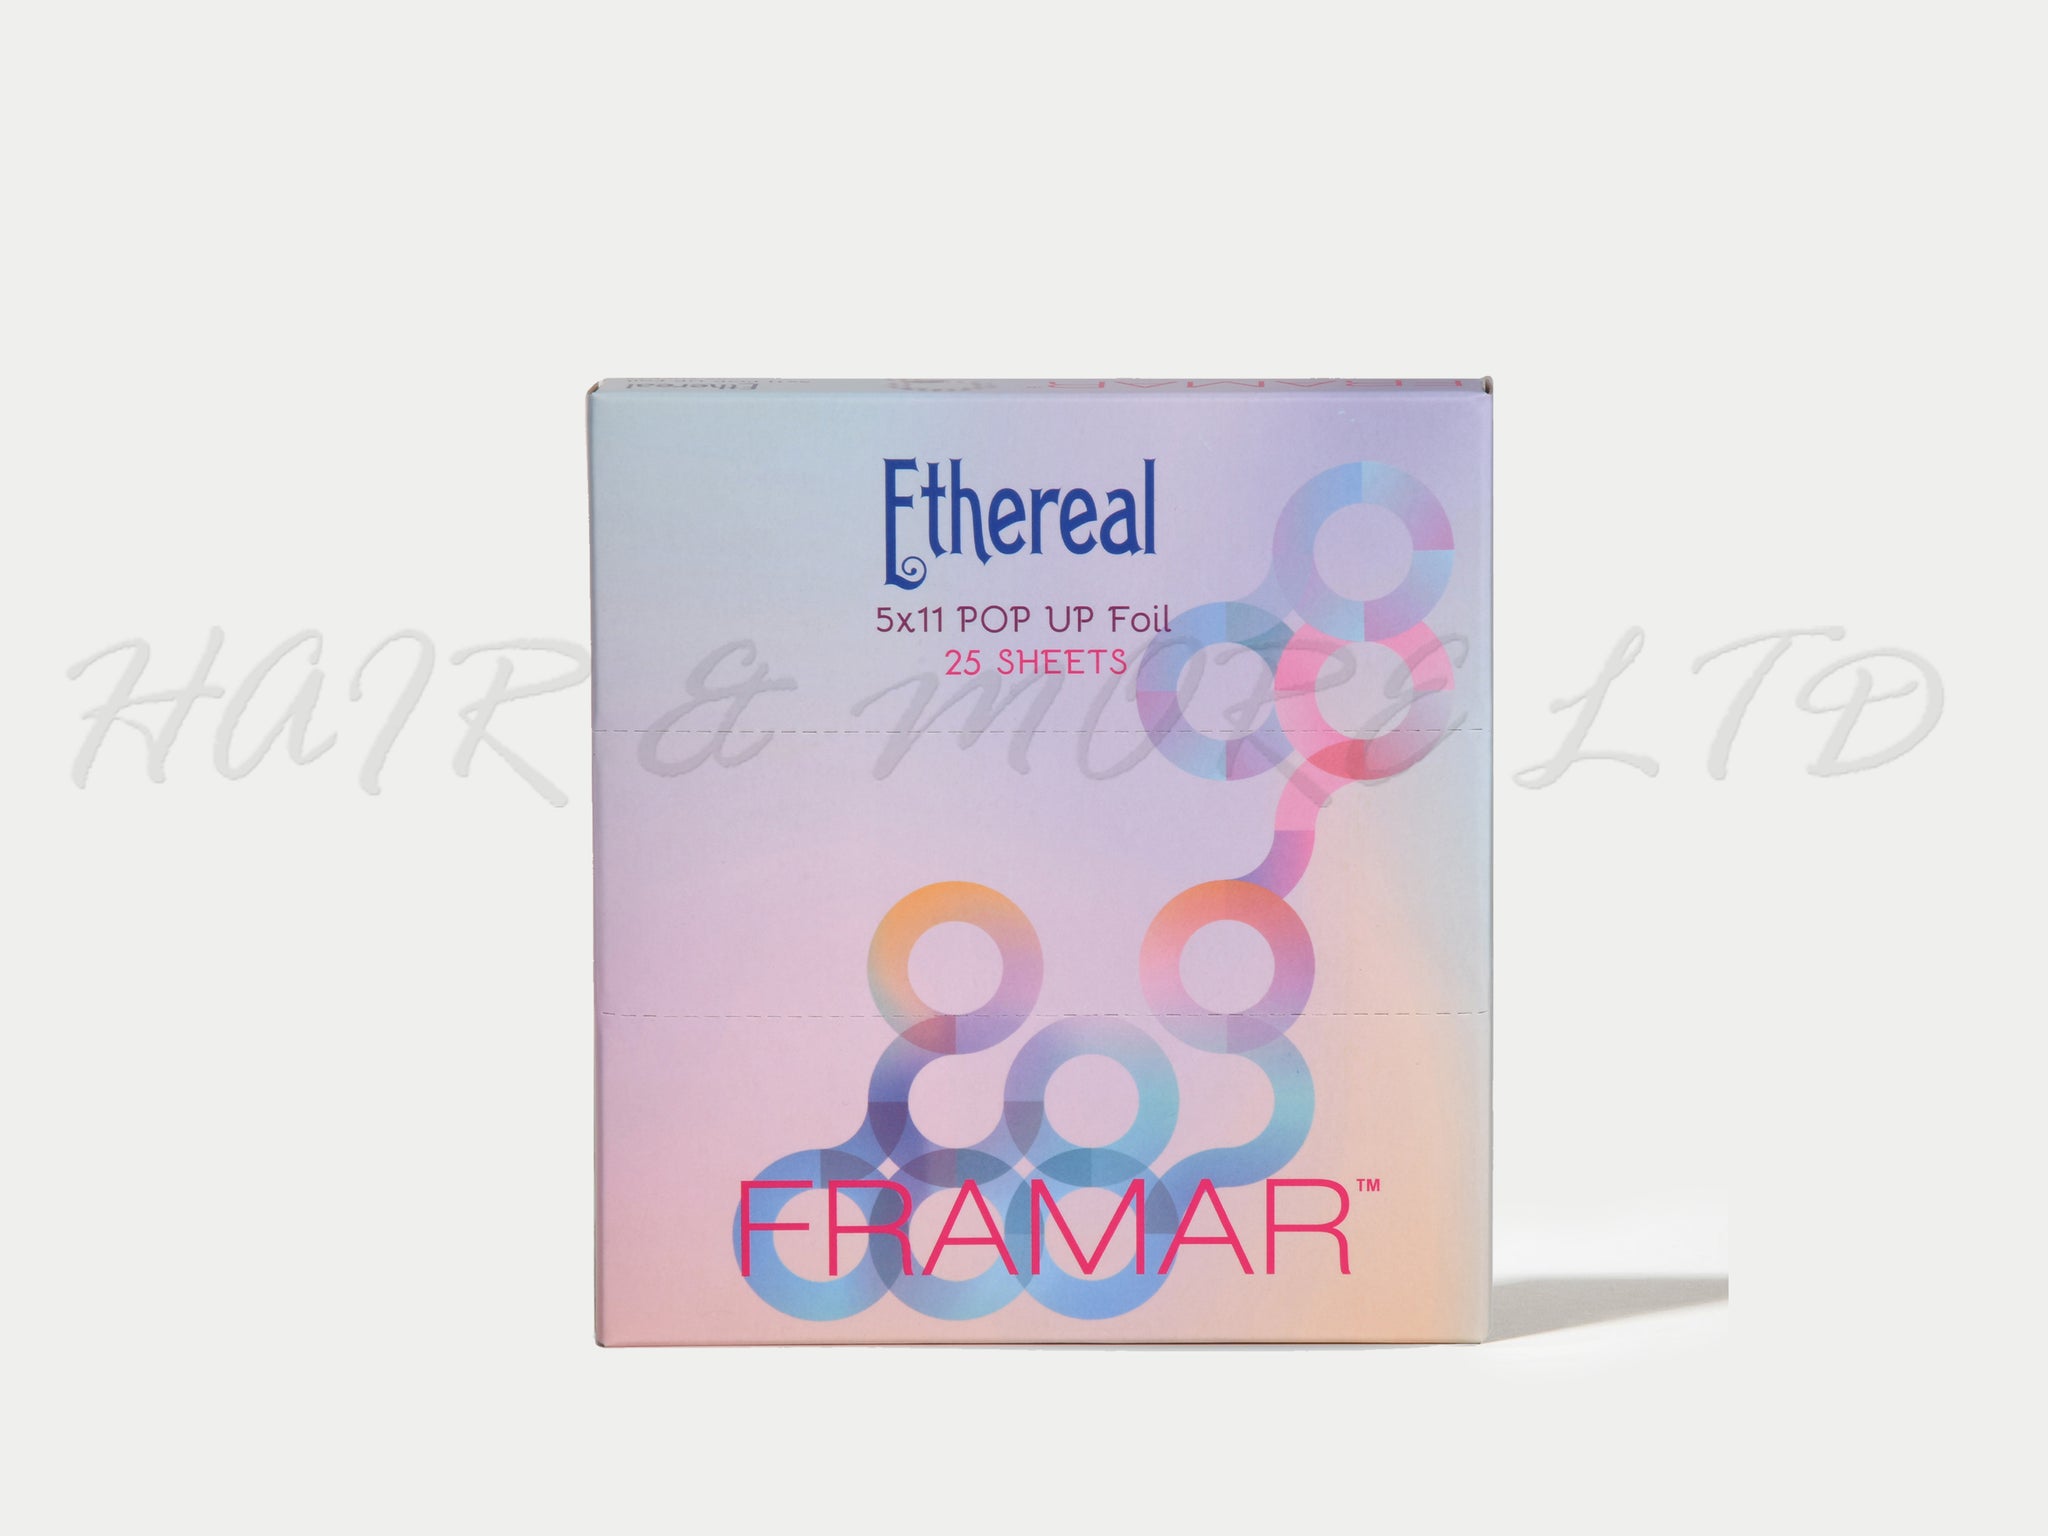  Framar Ethereal Pop Up Hair Foil, Aluminum Foil